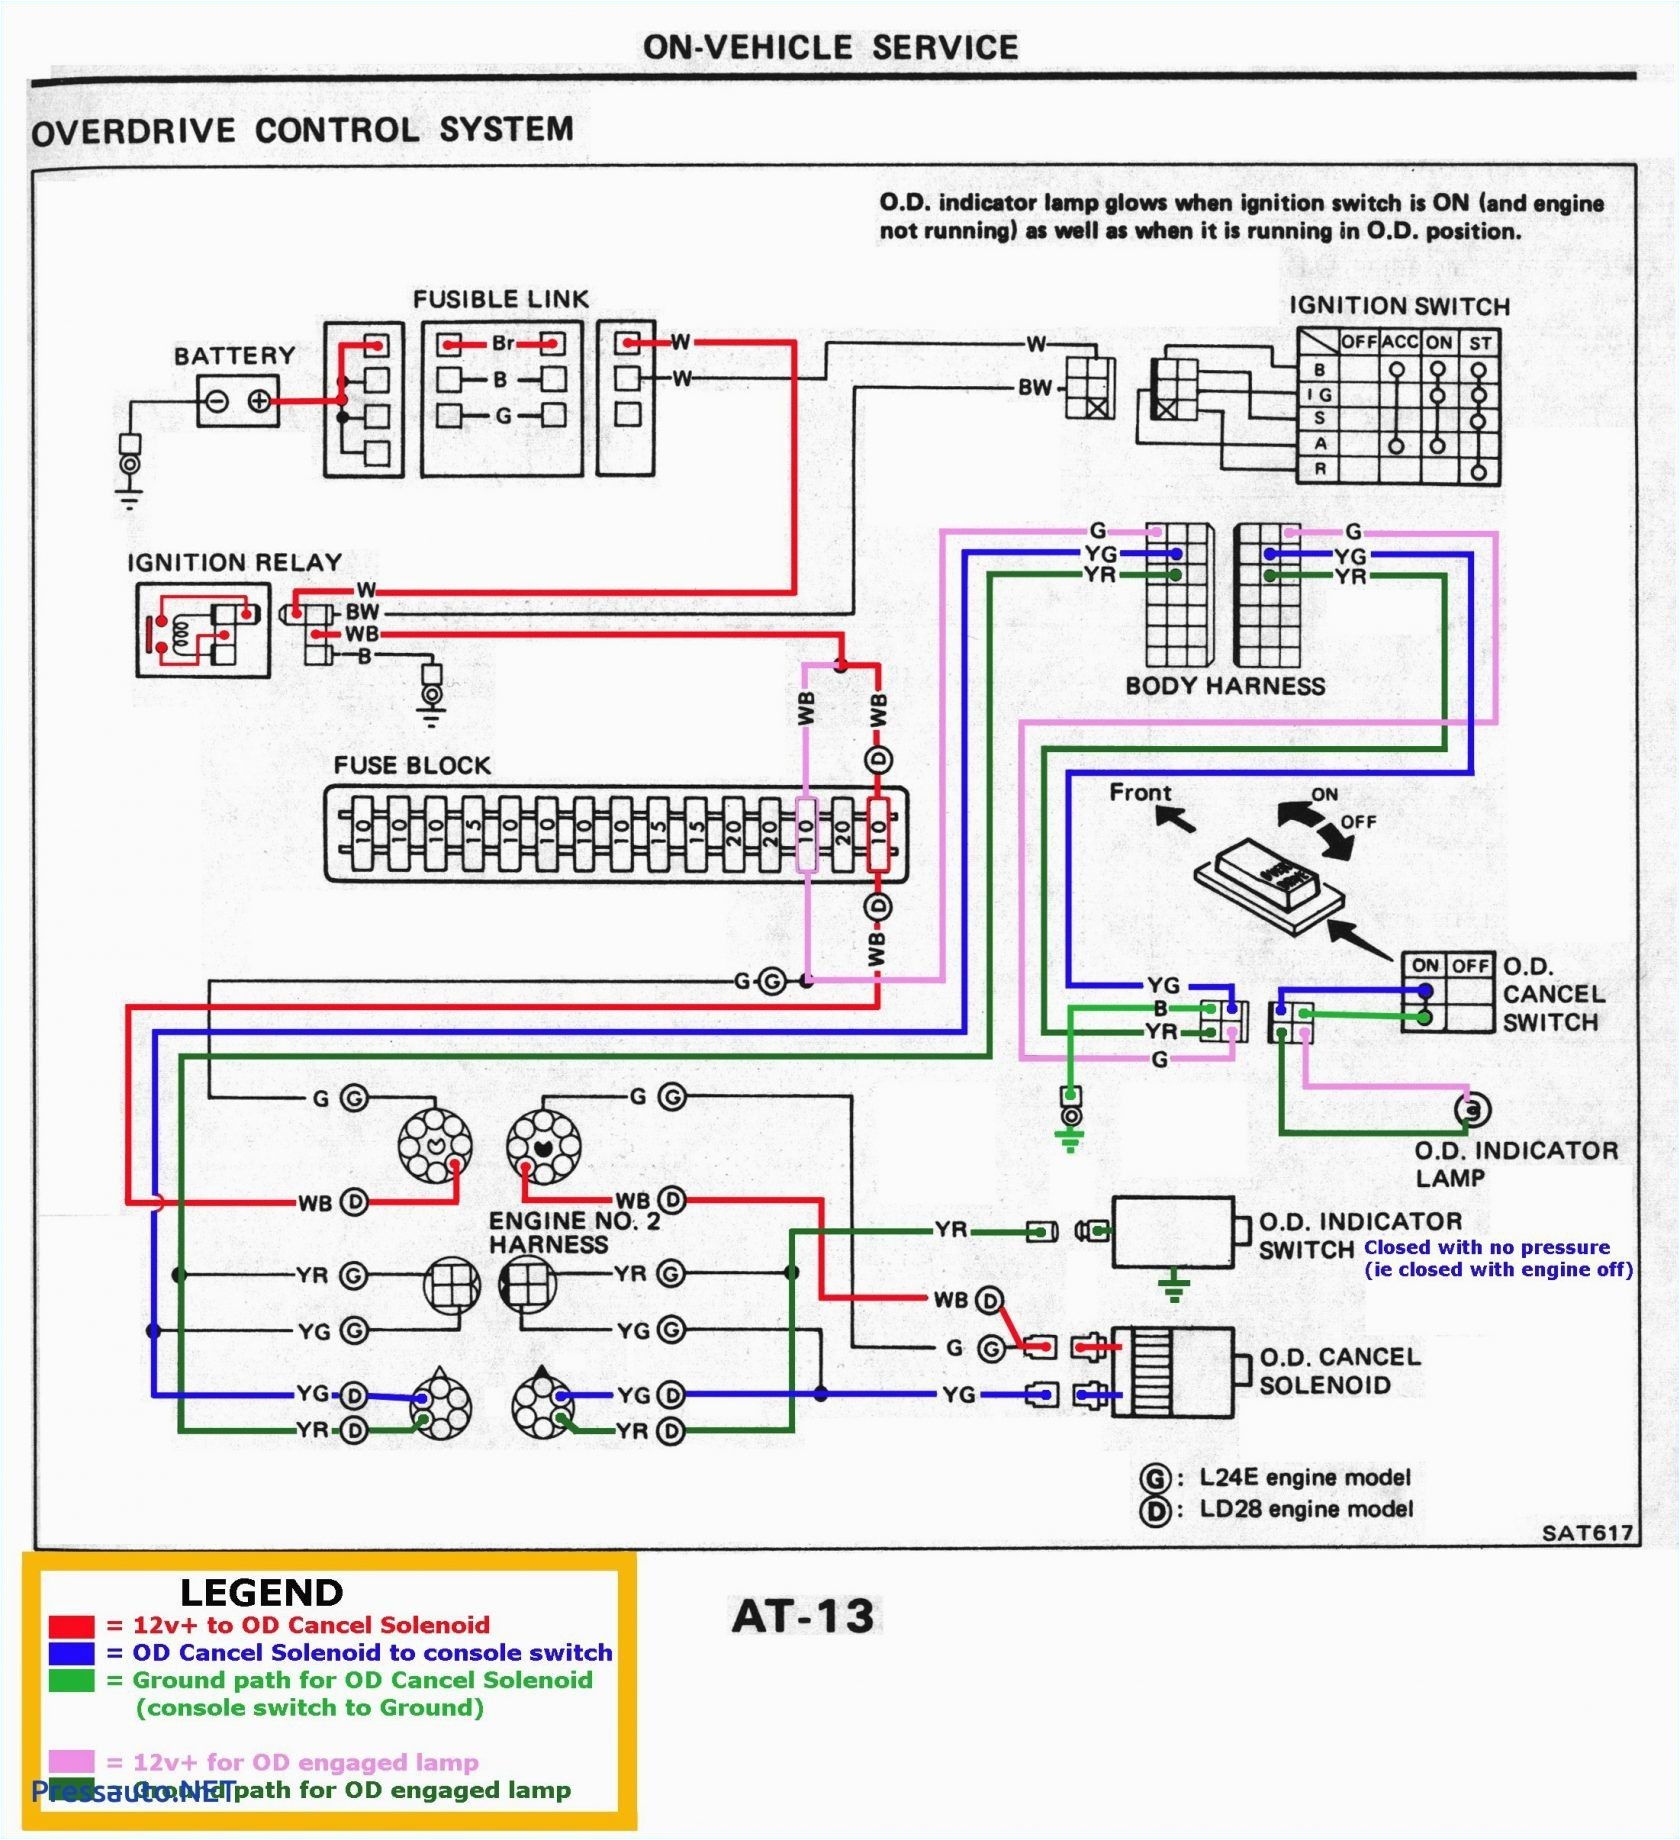 ignition wire harness diagram 98 gmc pickup wiring diagram usedgm ignition wiring harness diagram wiring diagram